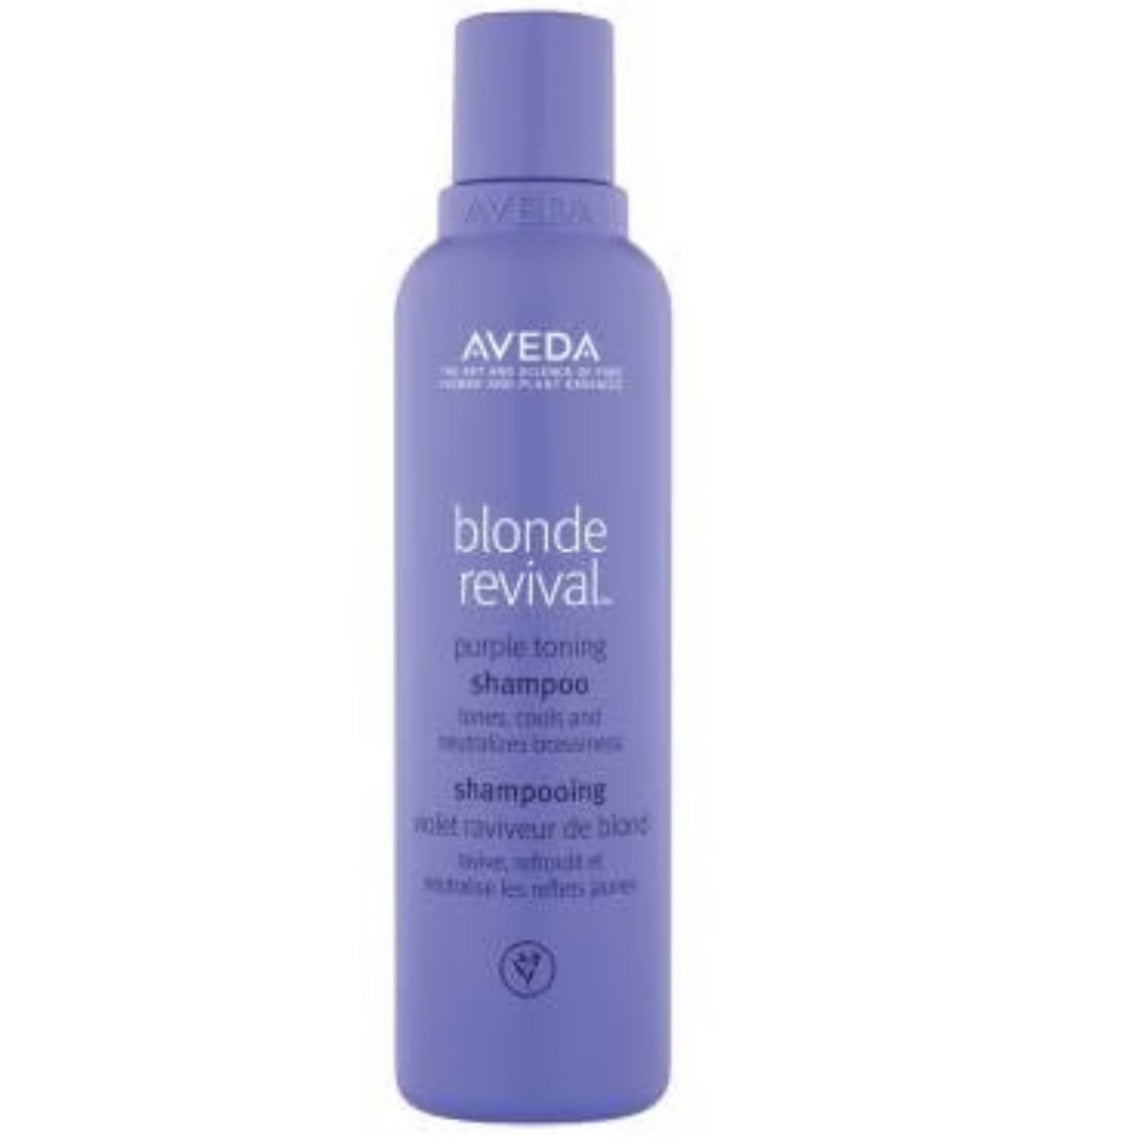 Blonde Revival Shampoo